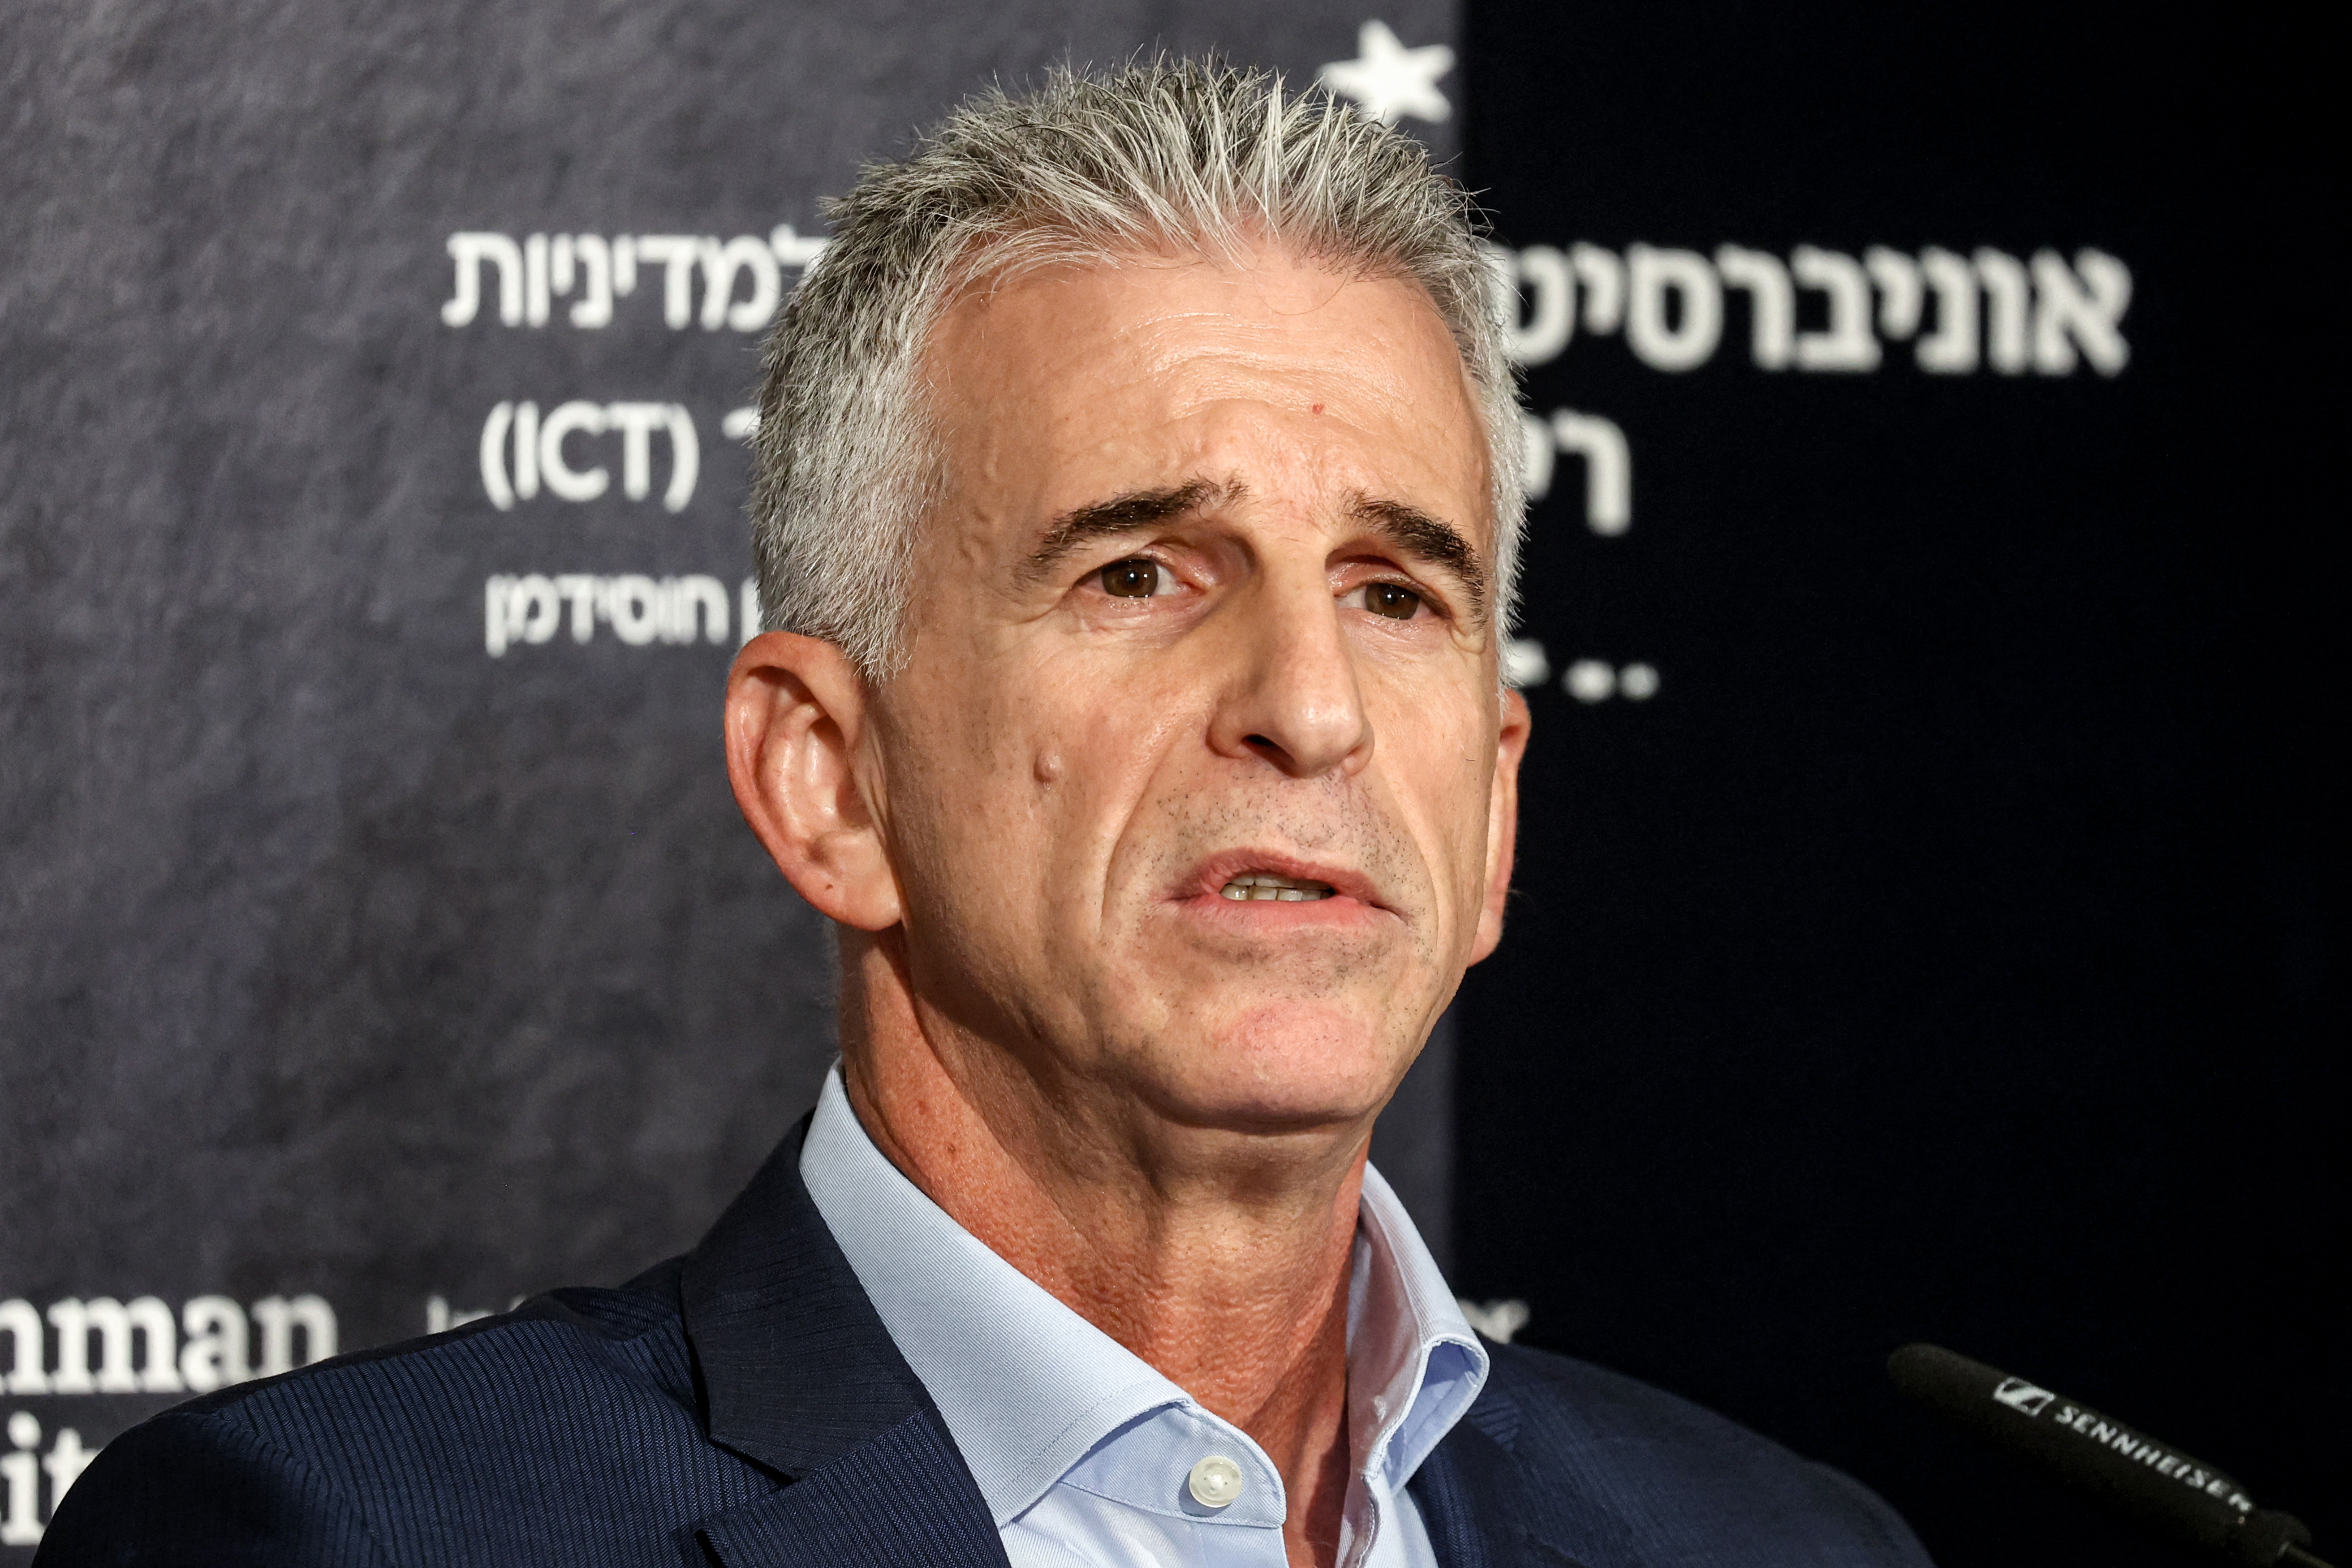 Mossad director David Barnea speaks in Herzliya, Israel, on September 10.